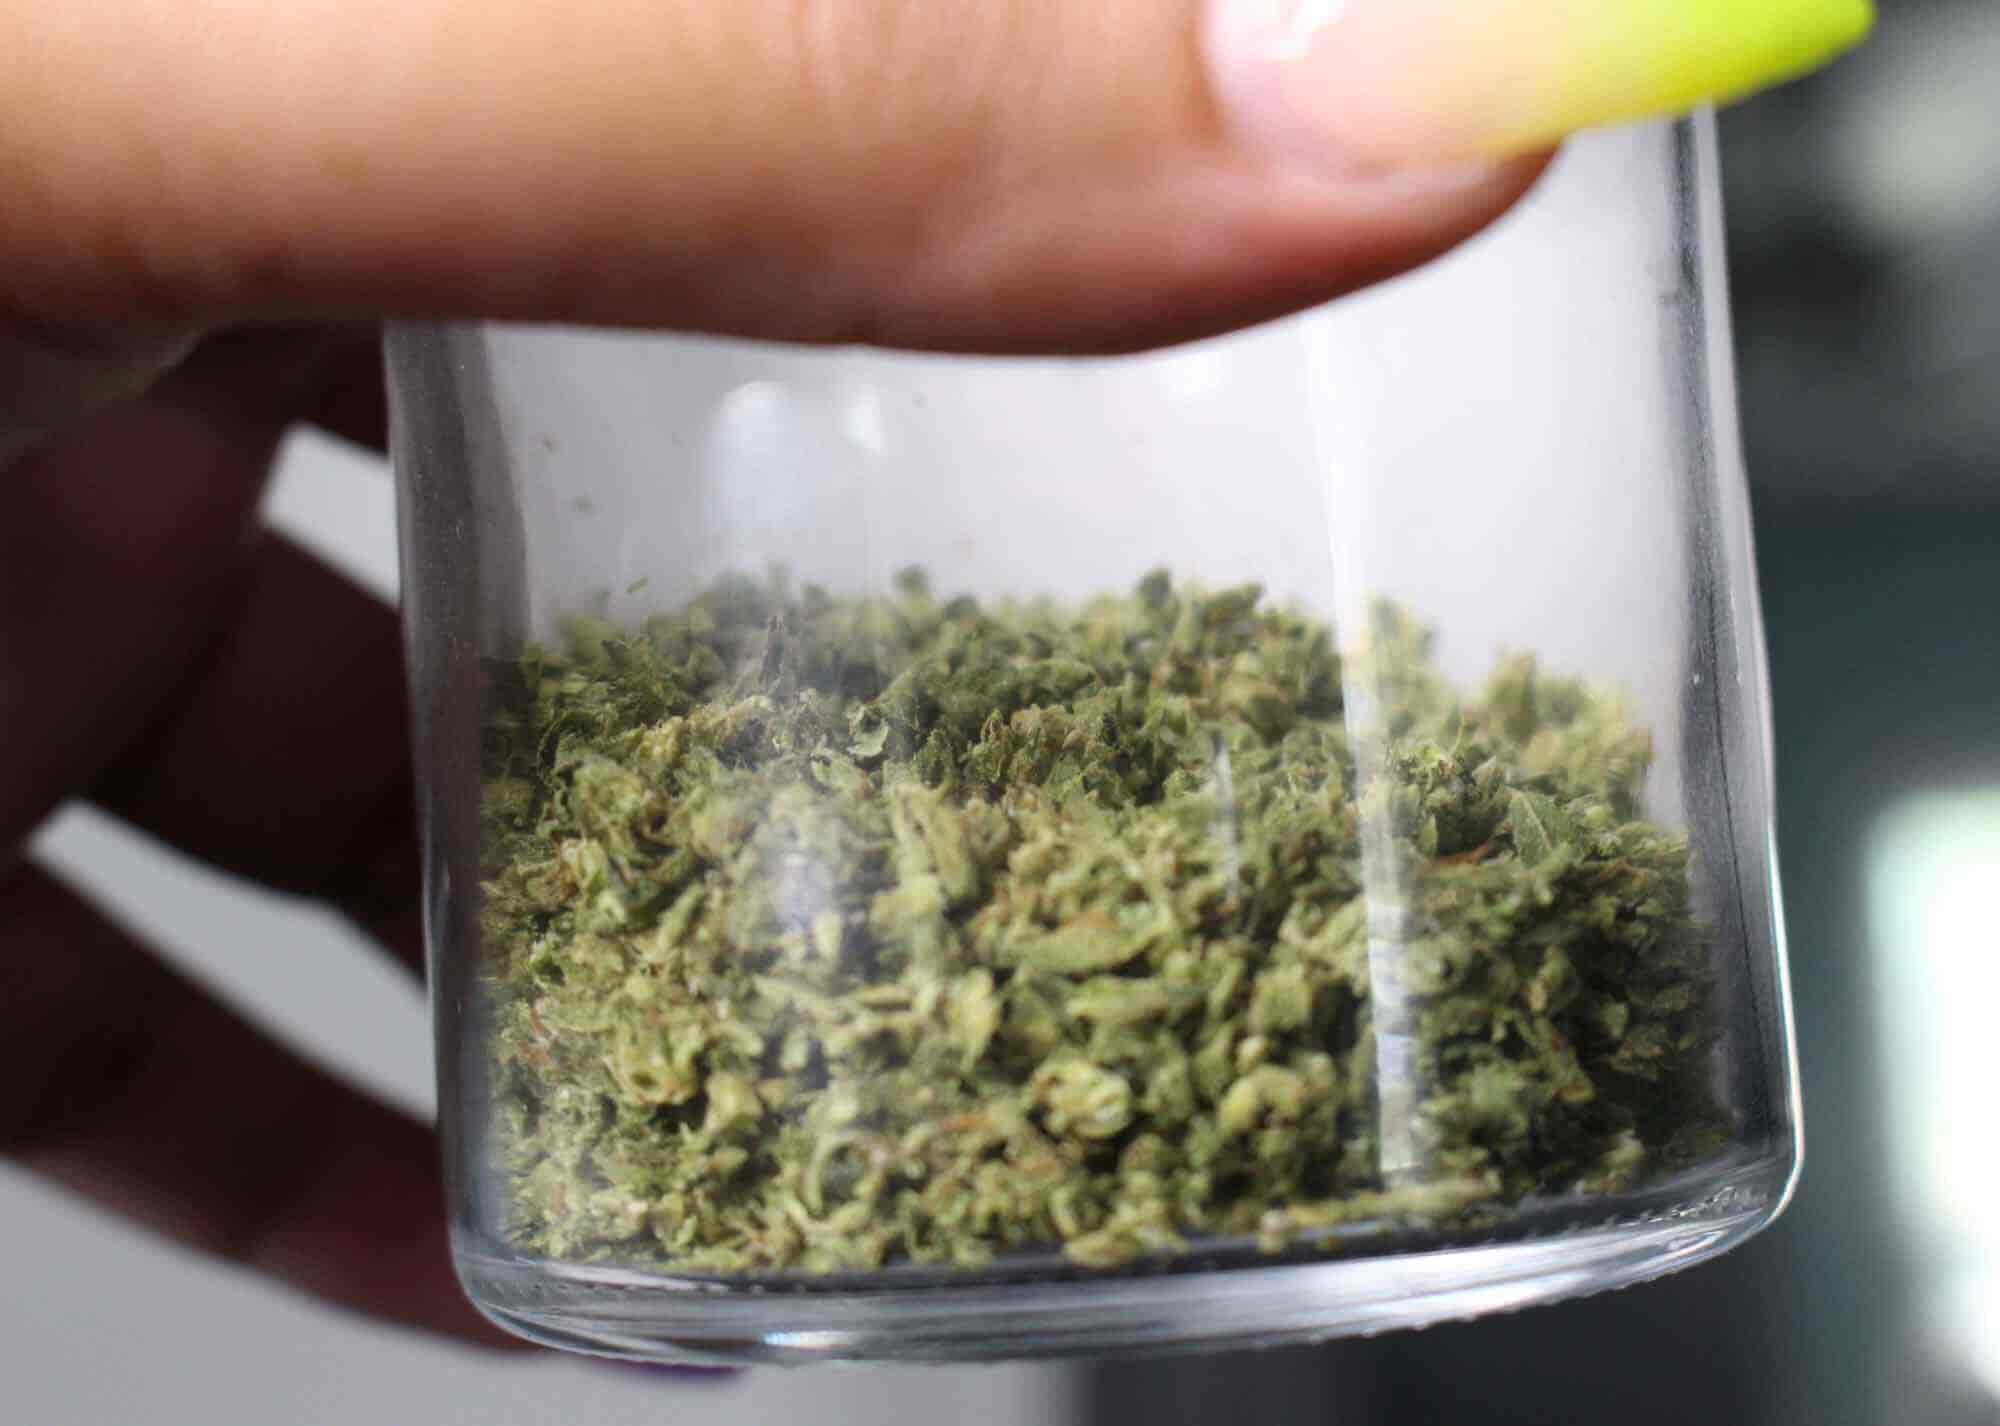 Cannabis Jar